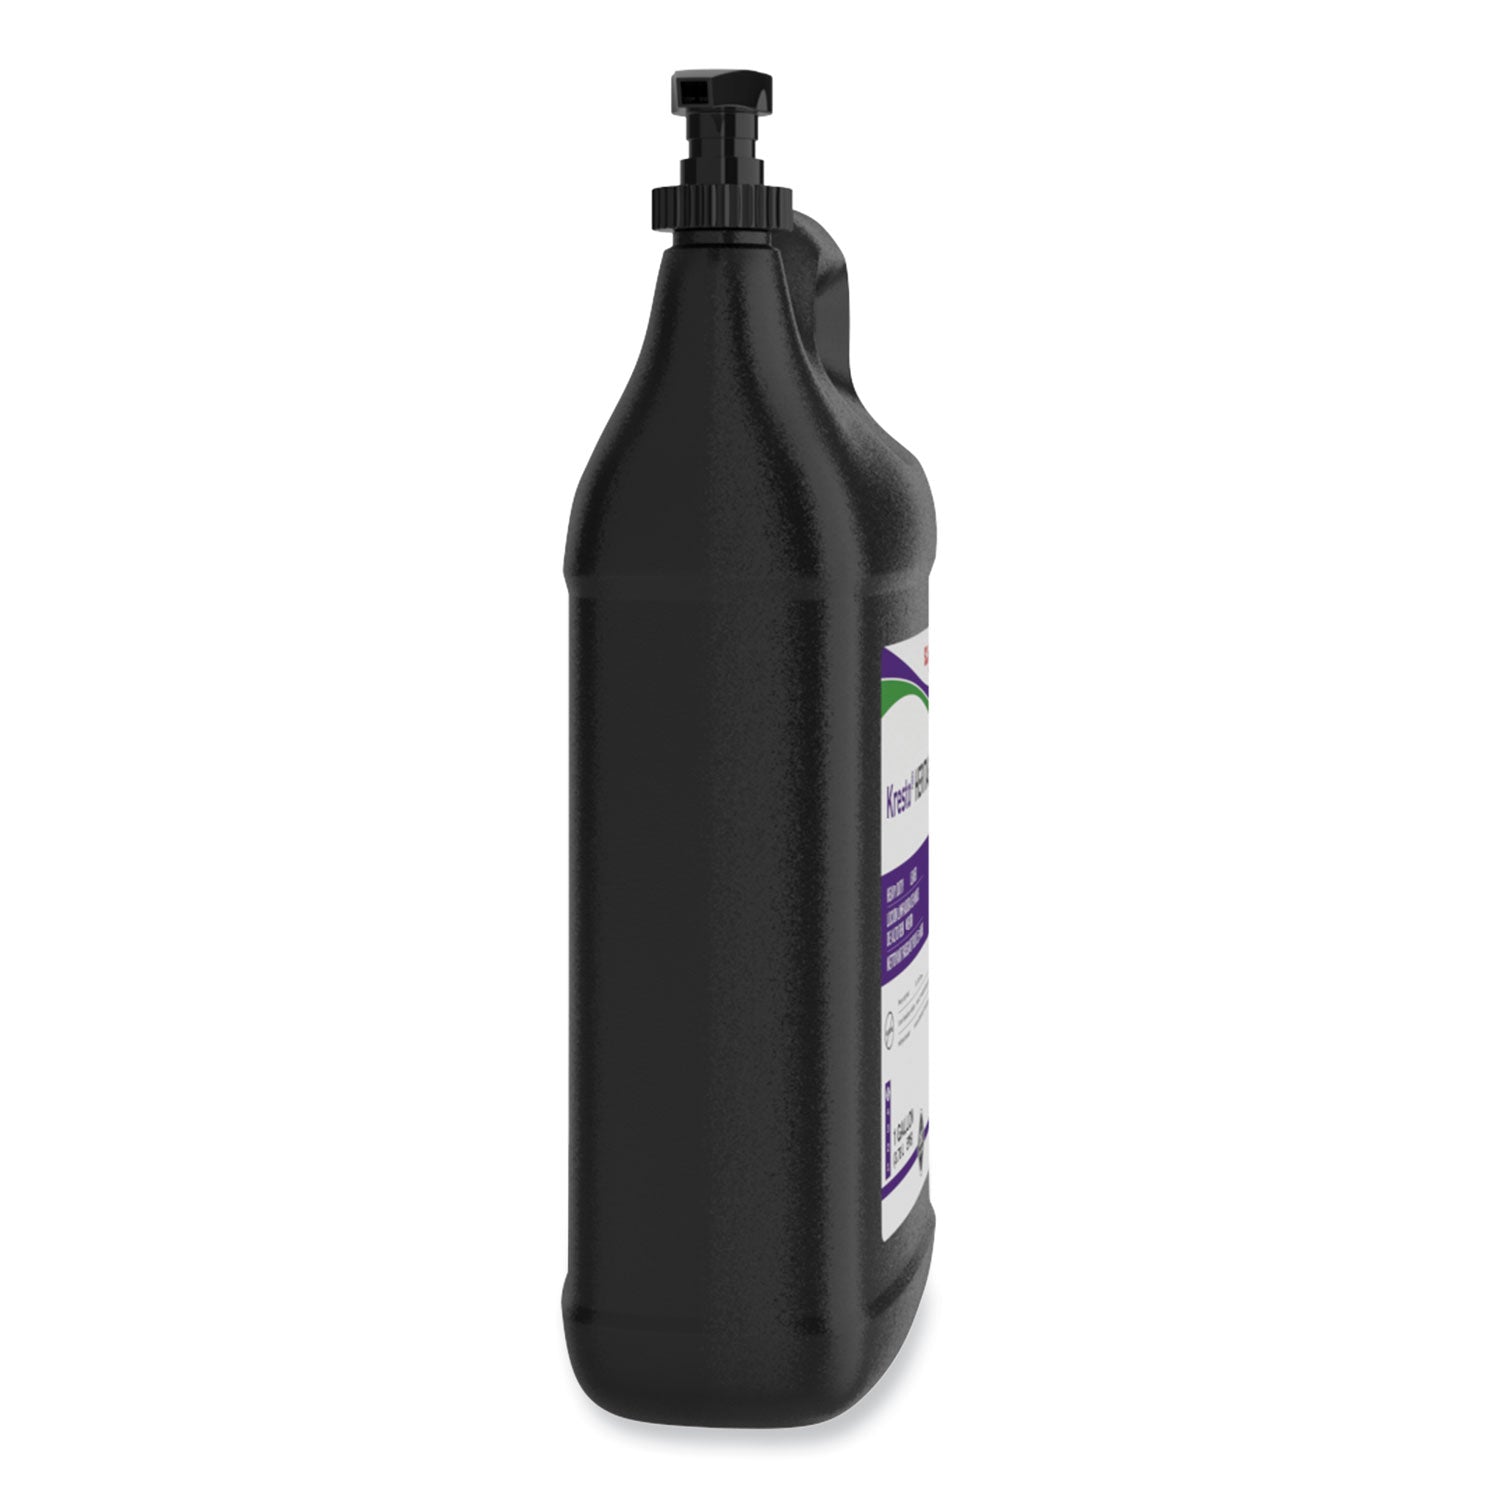 kresto-heritage-heavy-duty-hand-cleaner-fresh-scent-1-gal-bottle-refill-4-carton_sjn9102 - 3